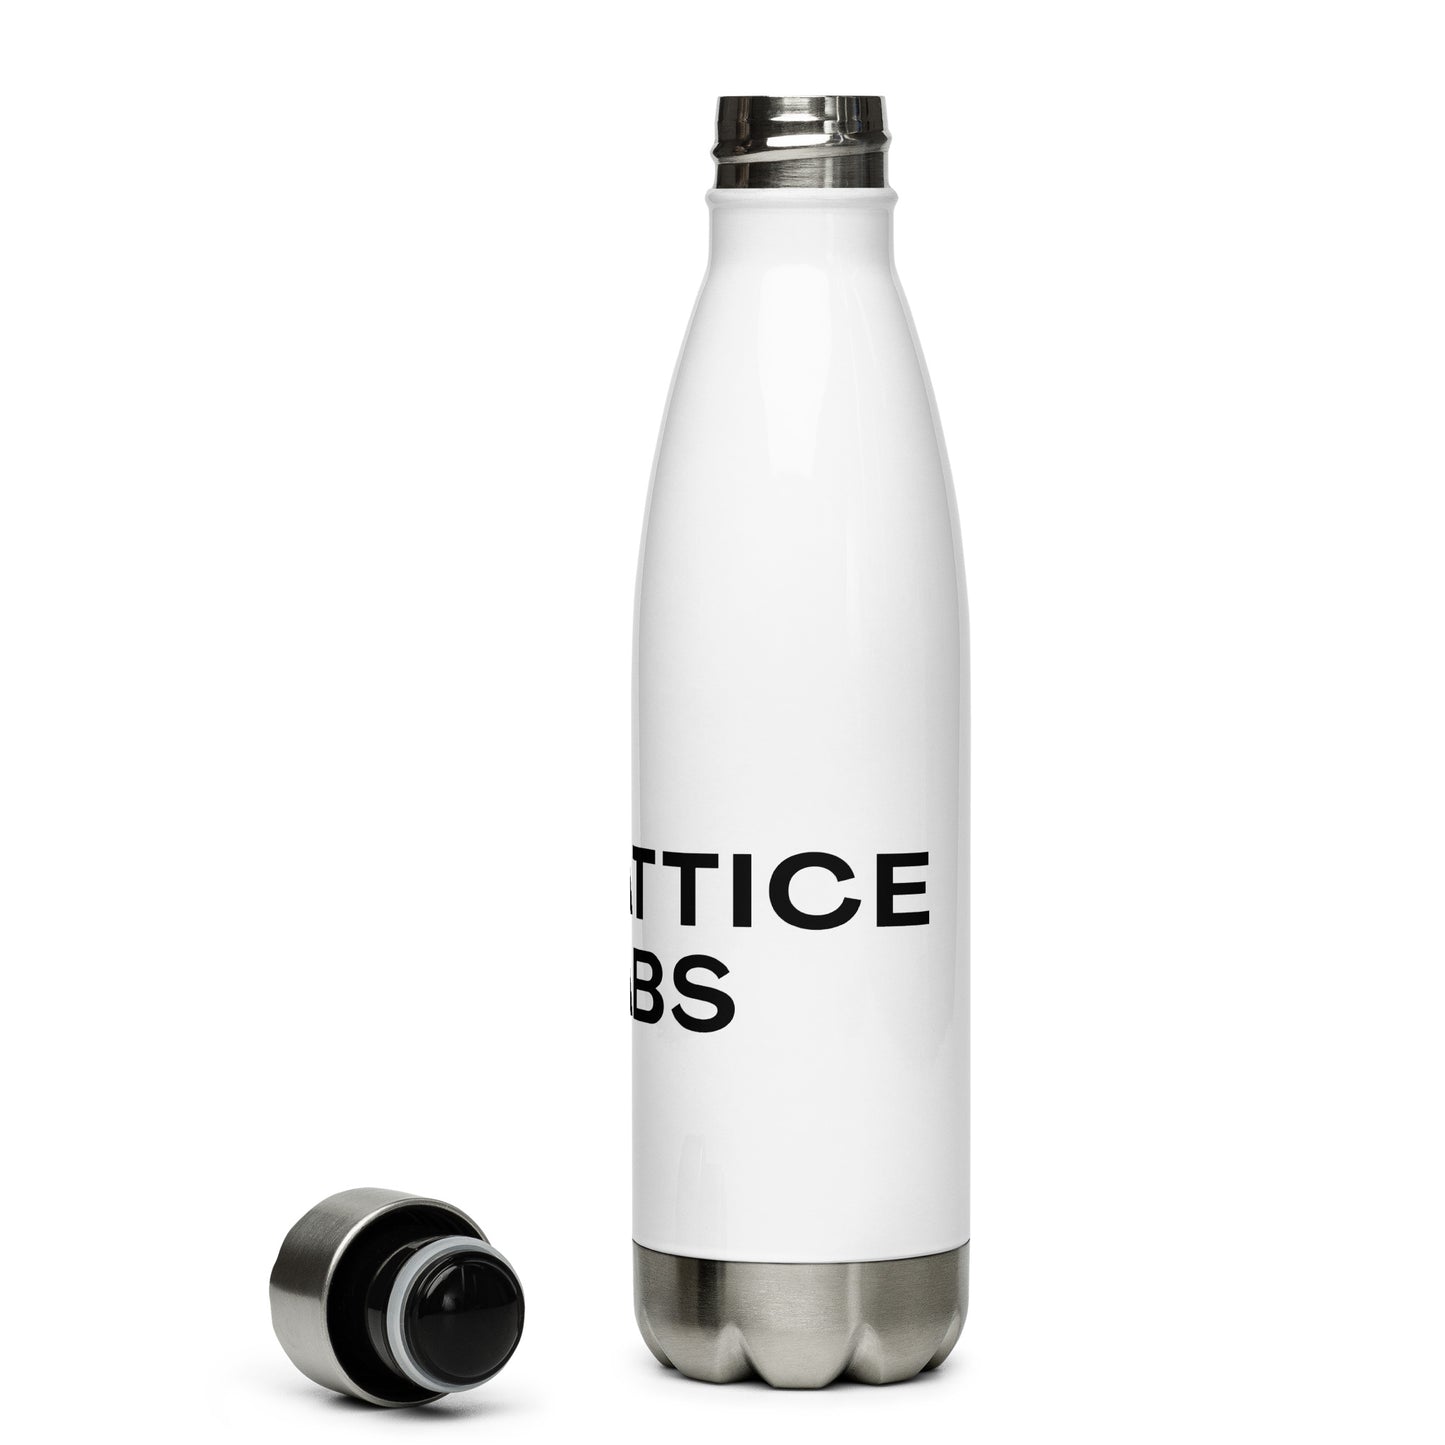 Lattice Labs Stainless Steel Water Bottle